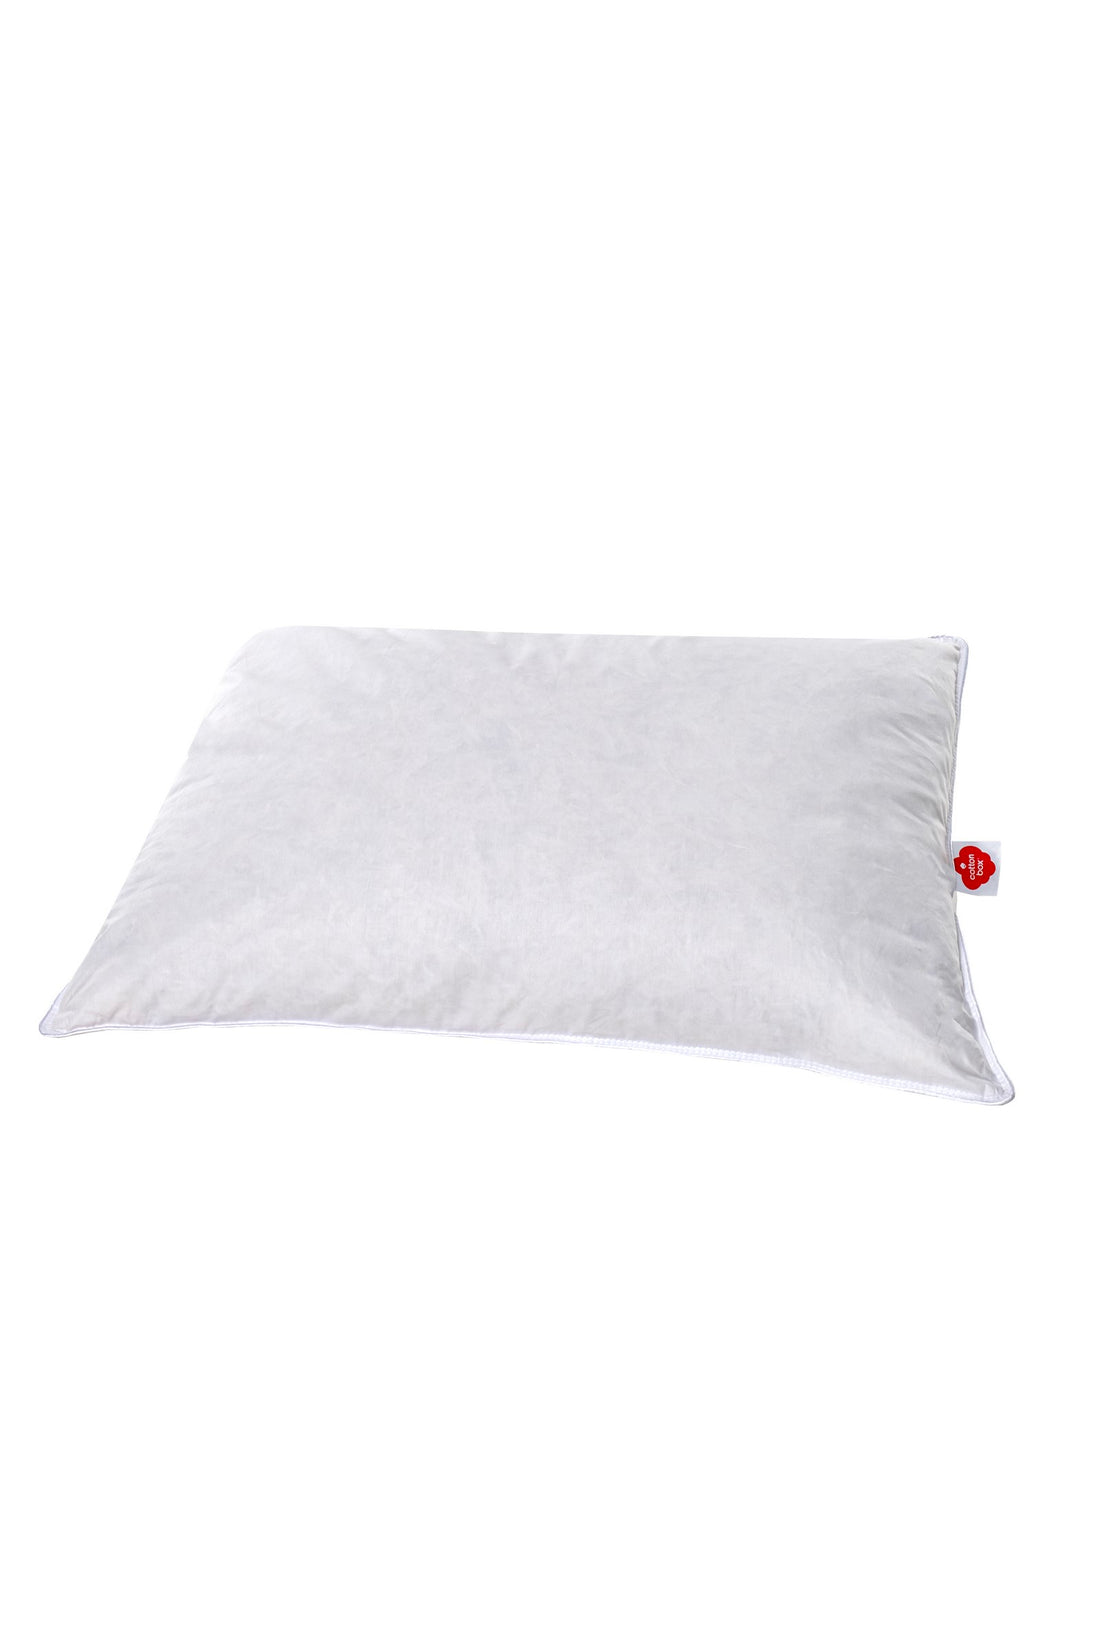 Cotton Box Goose Feather Pillow 5% Down - 95% Back 50x70